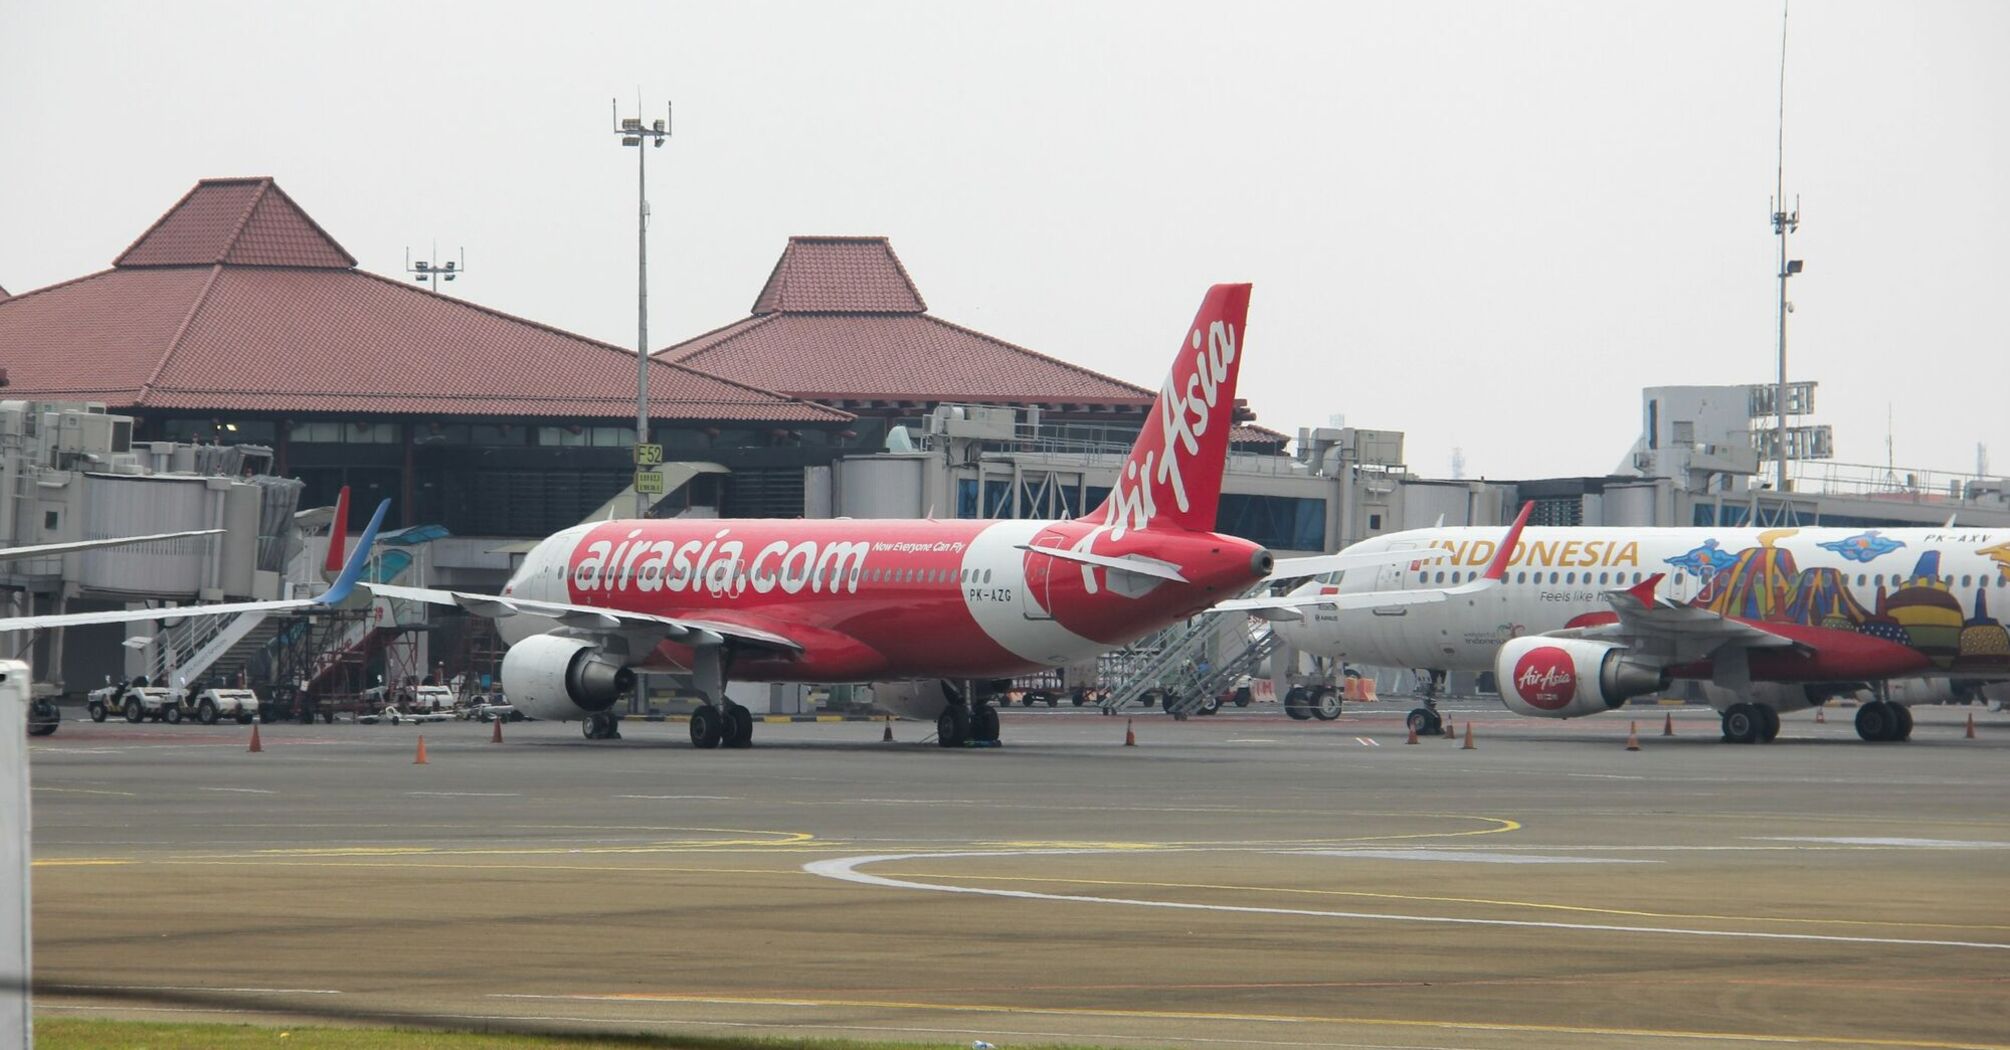 AirAsia X aircraft parked at the terminal